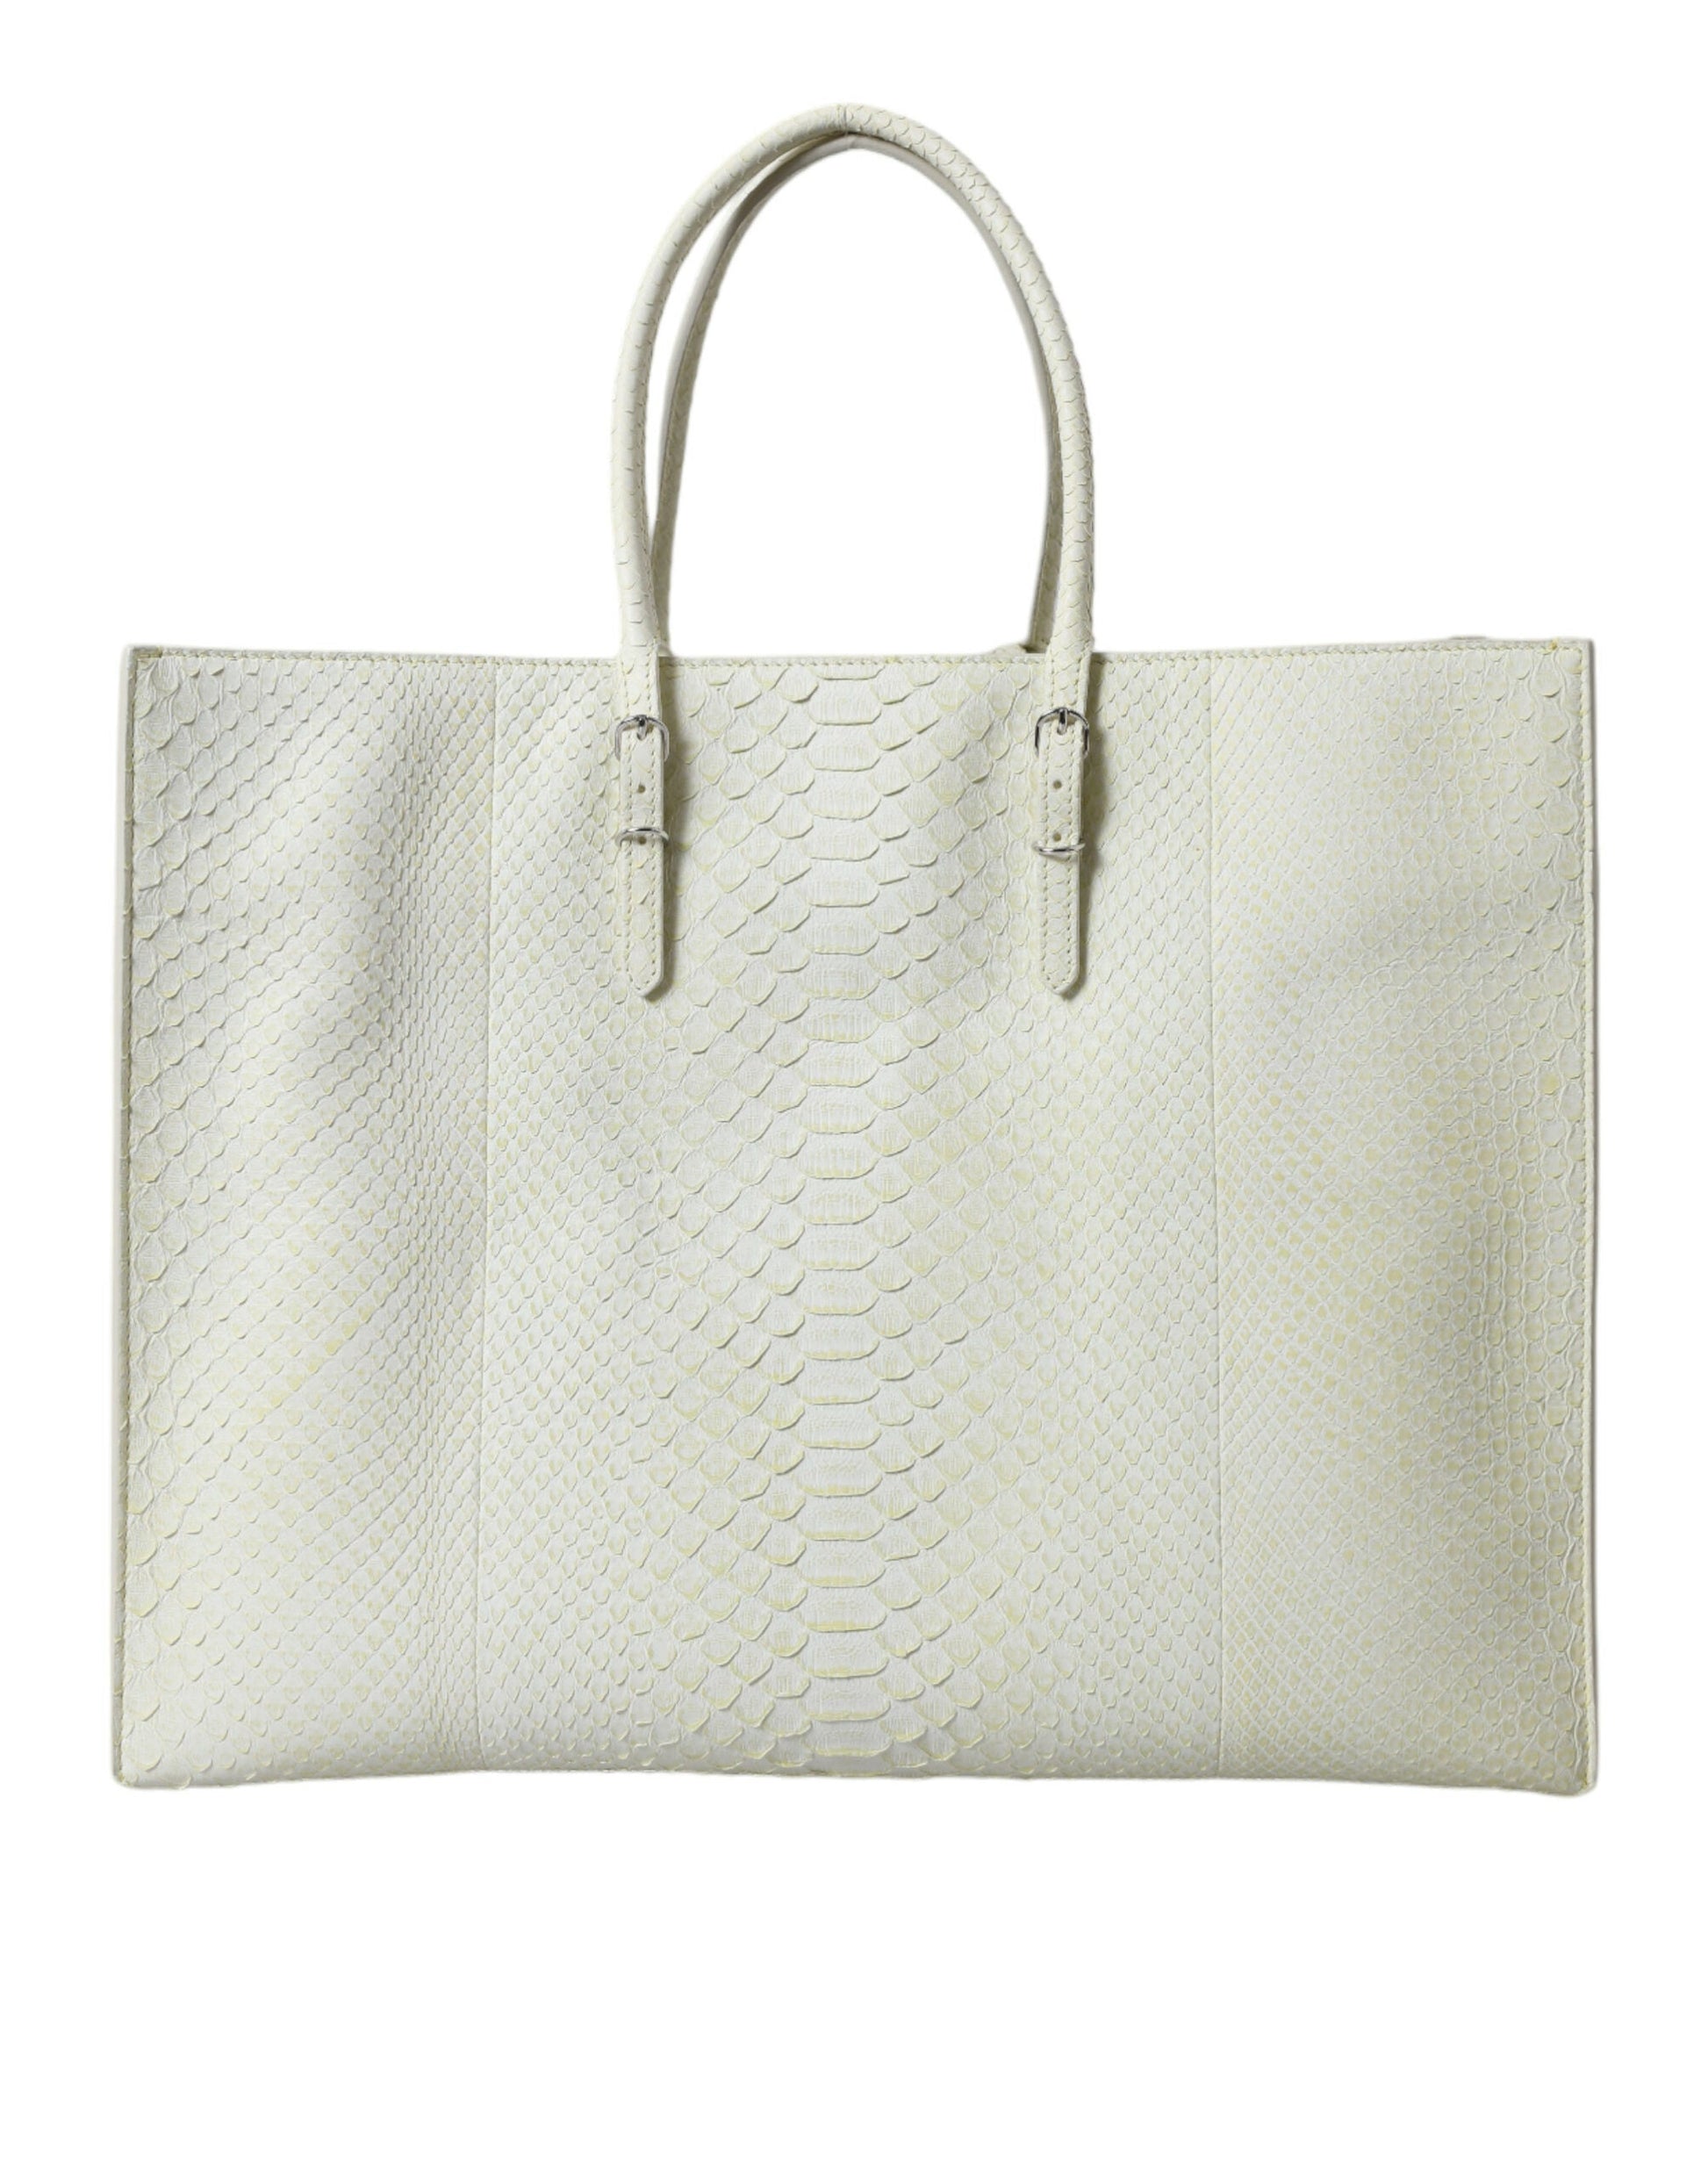 Balenciaga Chic Python Leather Tote in White & Yellow | Fashionsarah.com